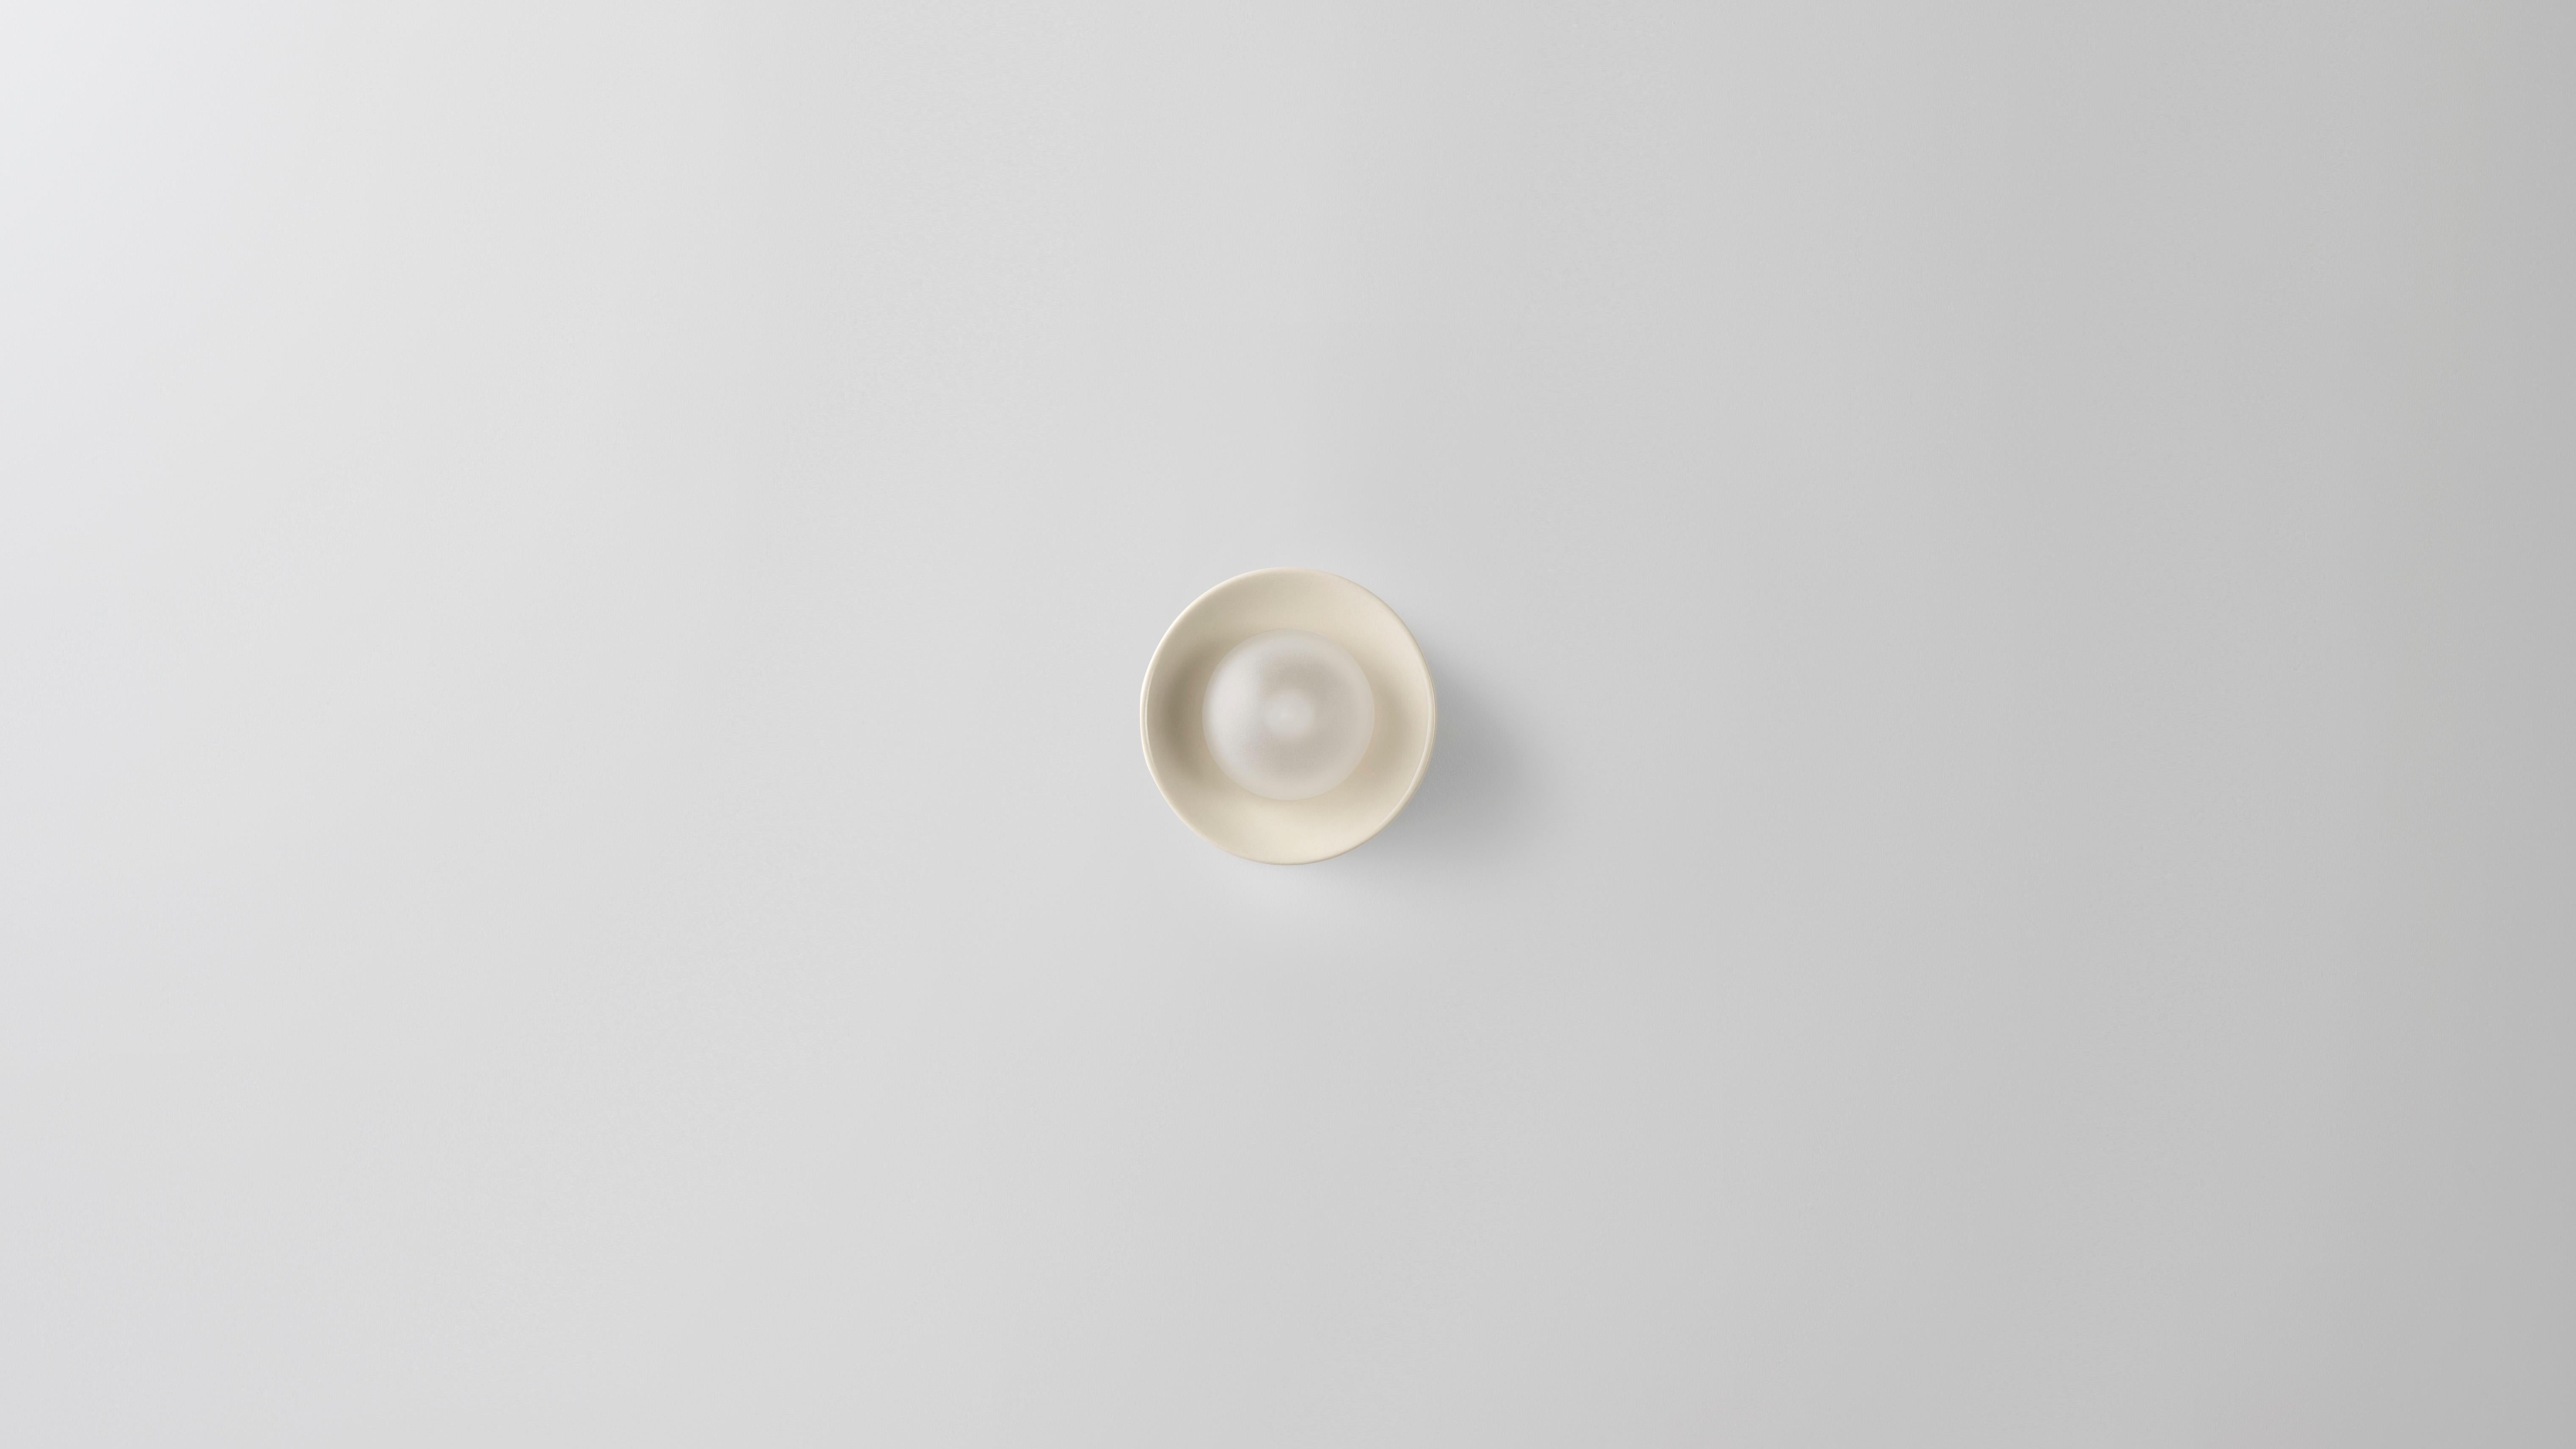 Micro ceramic anton wall sconce by Volker Haug
Dimensions: diameter 8 cm x depth 6.5 cm 
Material: cast ceramic. 
Finish: glazed clear, brown, or crisp white.
Lamp: G9 LED (240V / 120V US). 12V option is available.
Glass Bulb: 45mm ø,